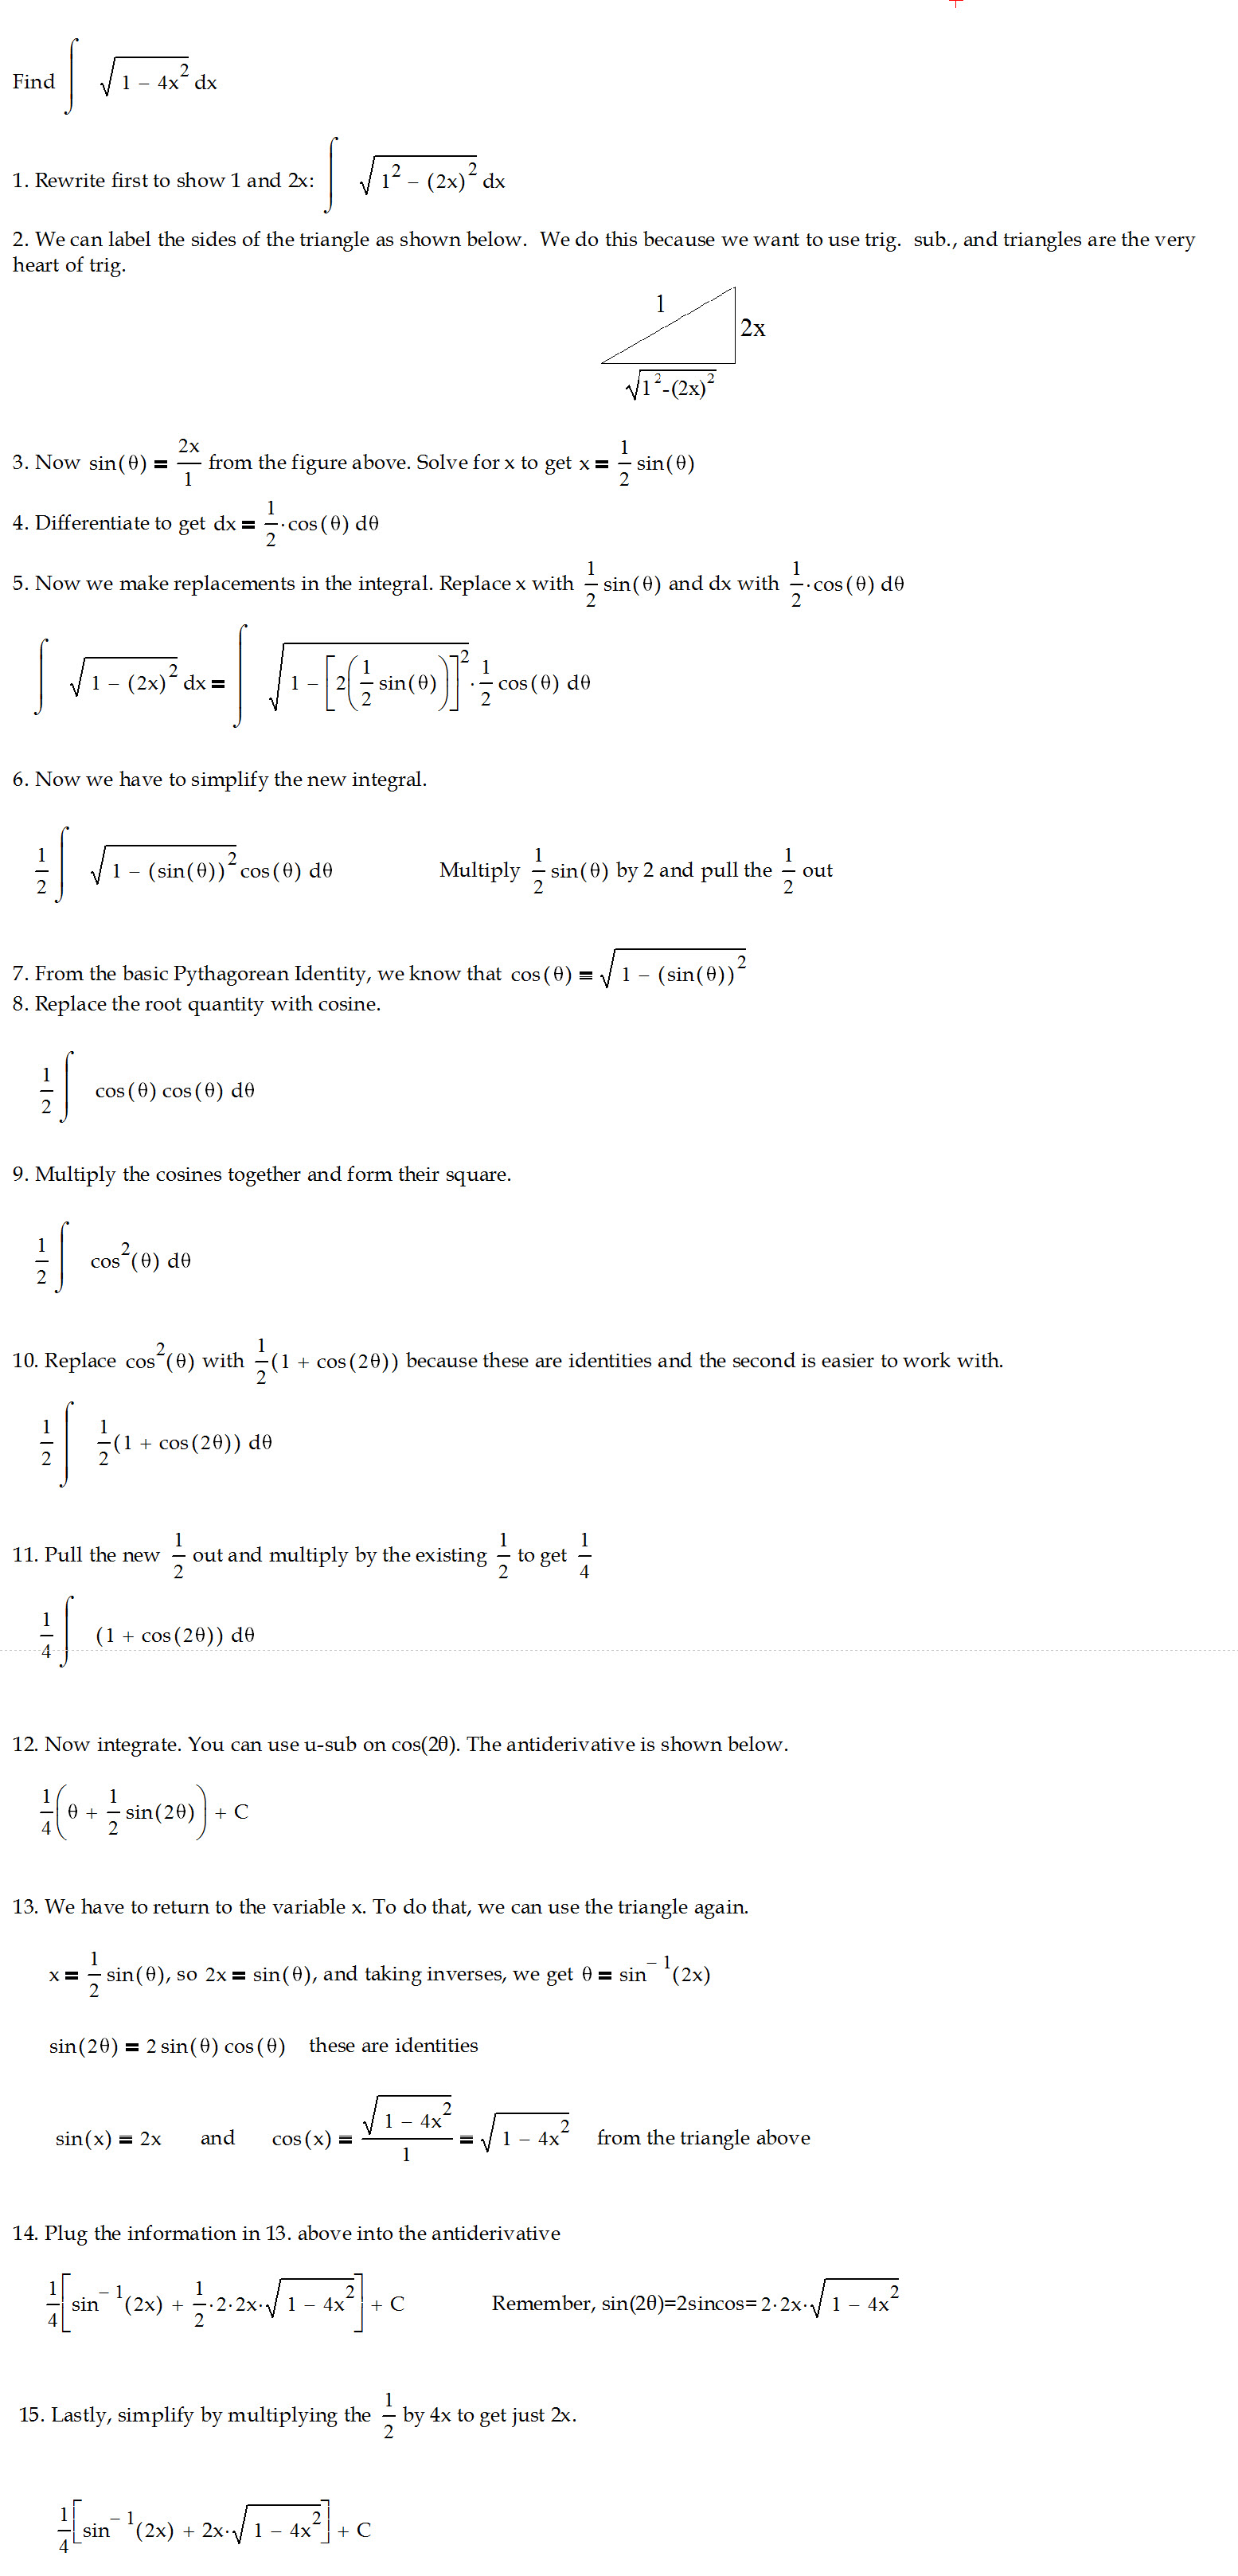 integral sqrt(1-4x^2) detailed steps